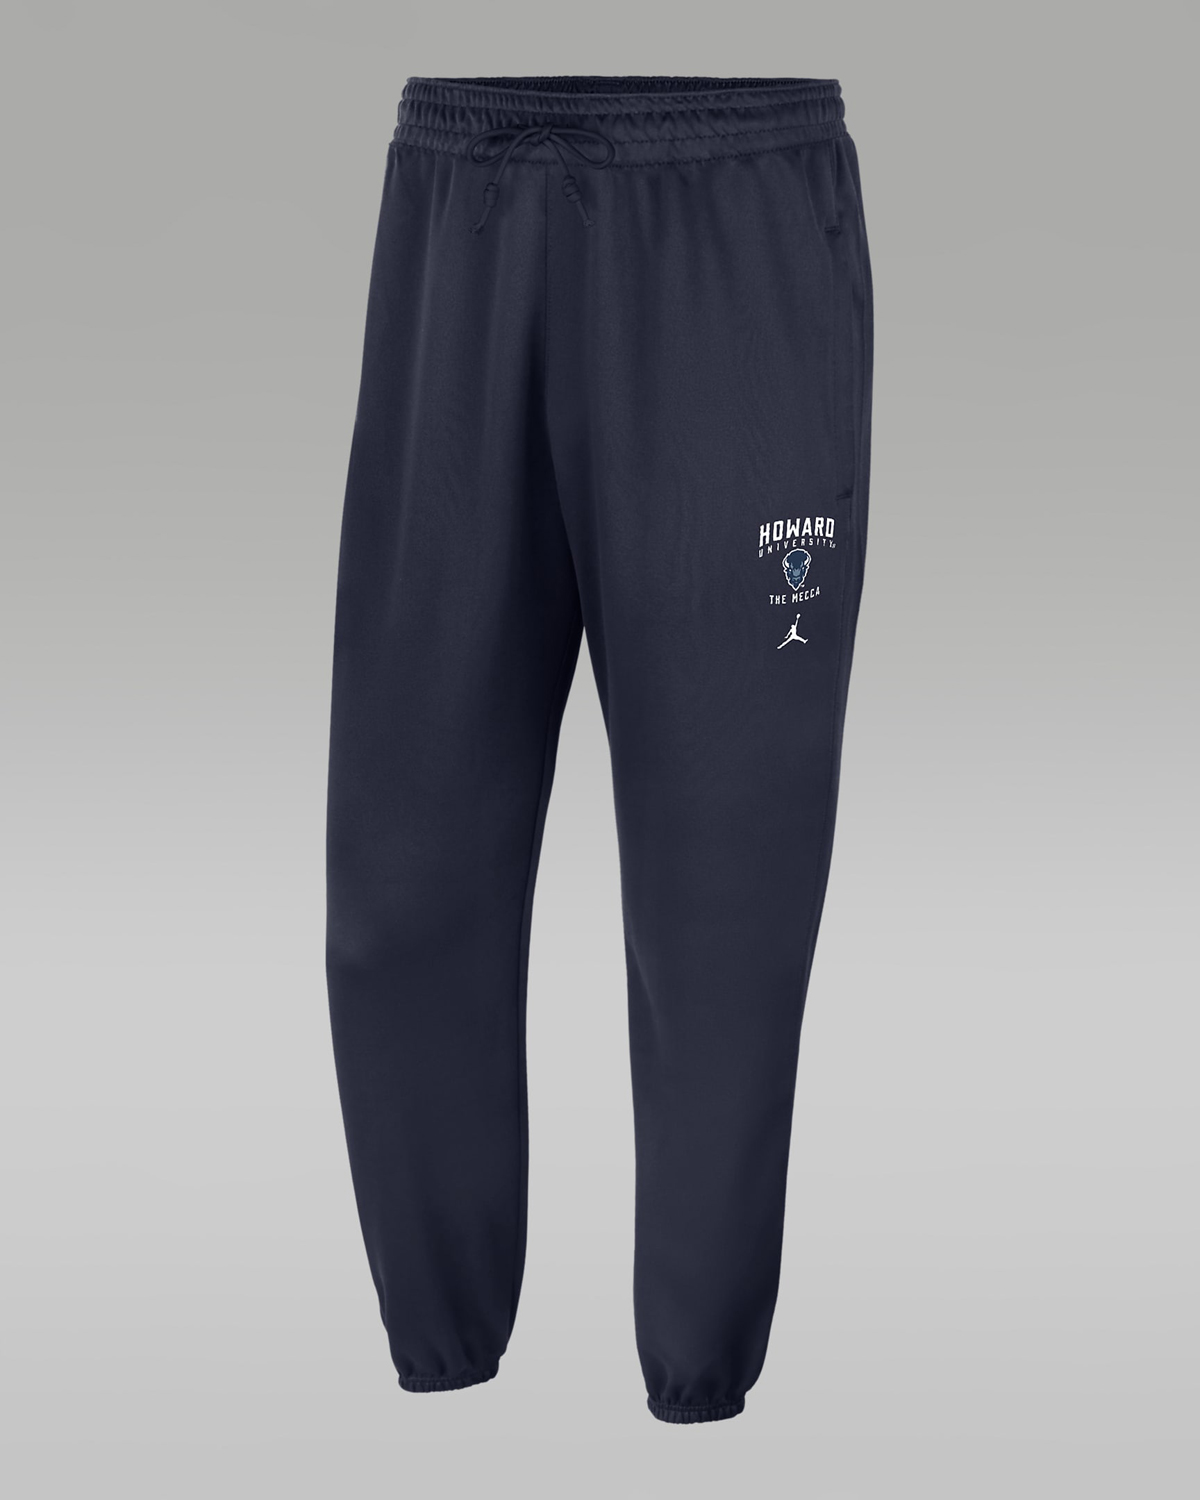 Jordan-Howard-University-Fleece-Jogger-Pants